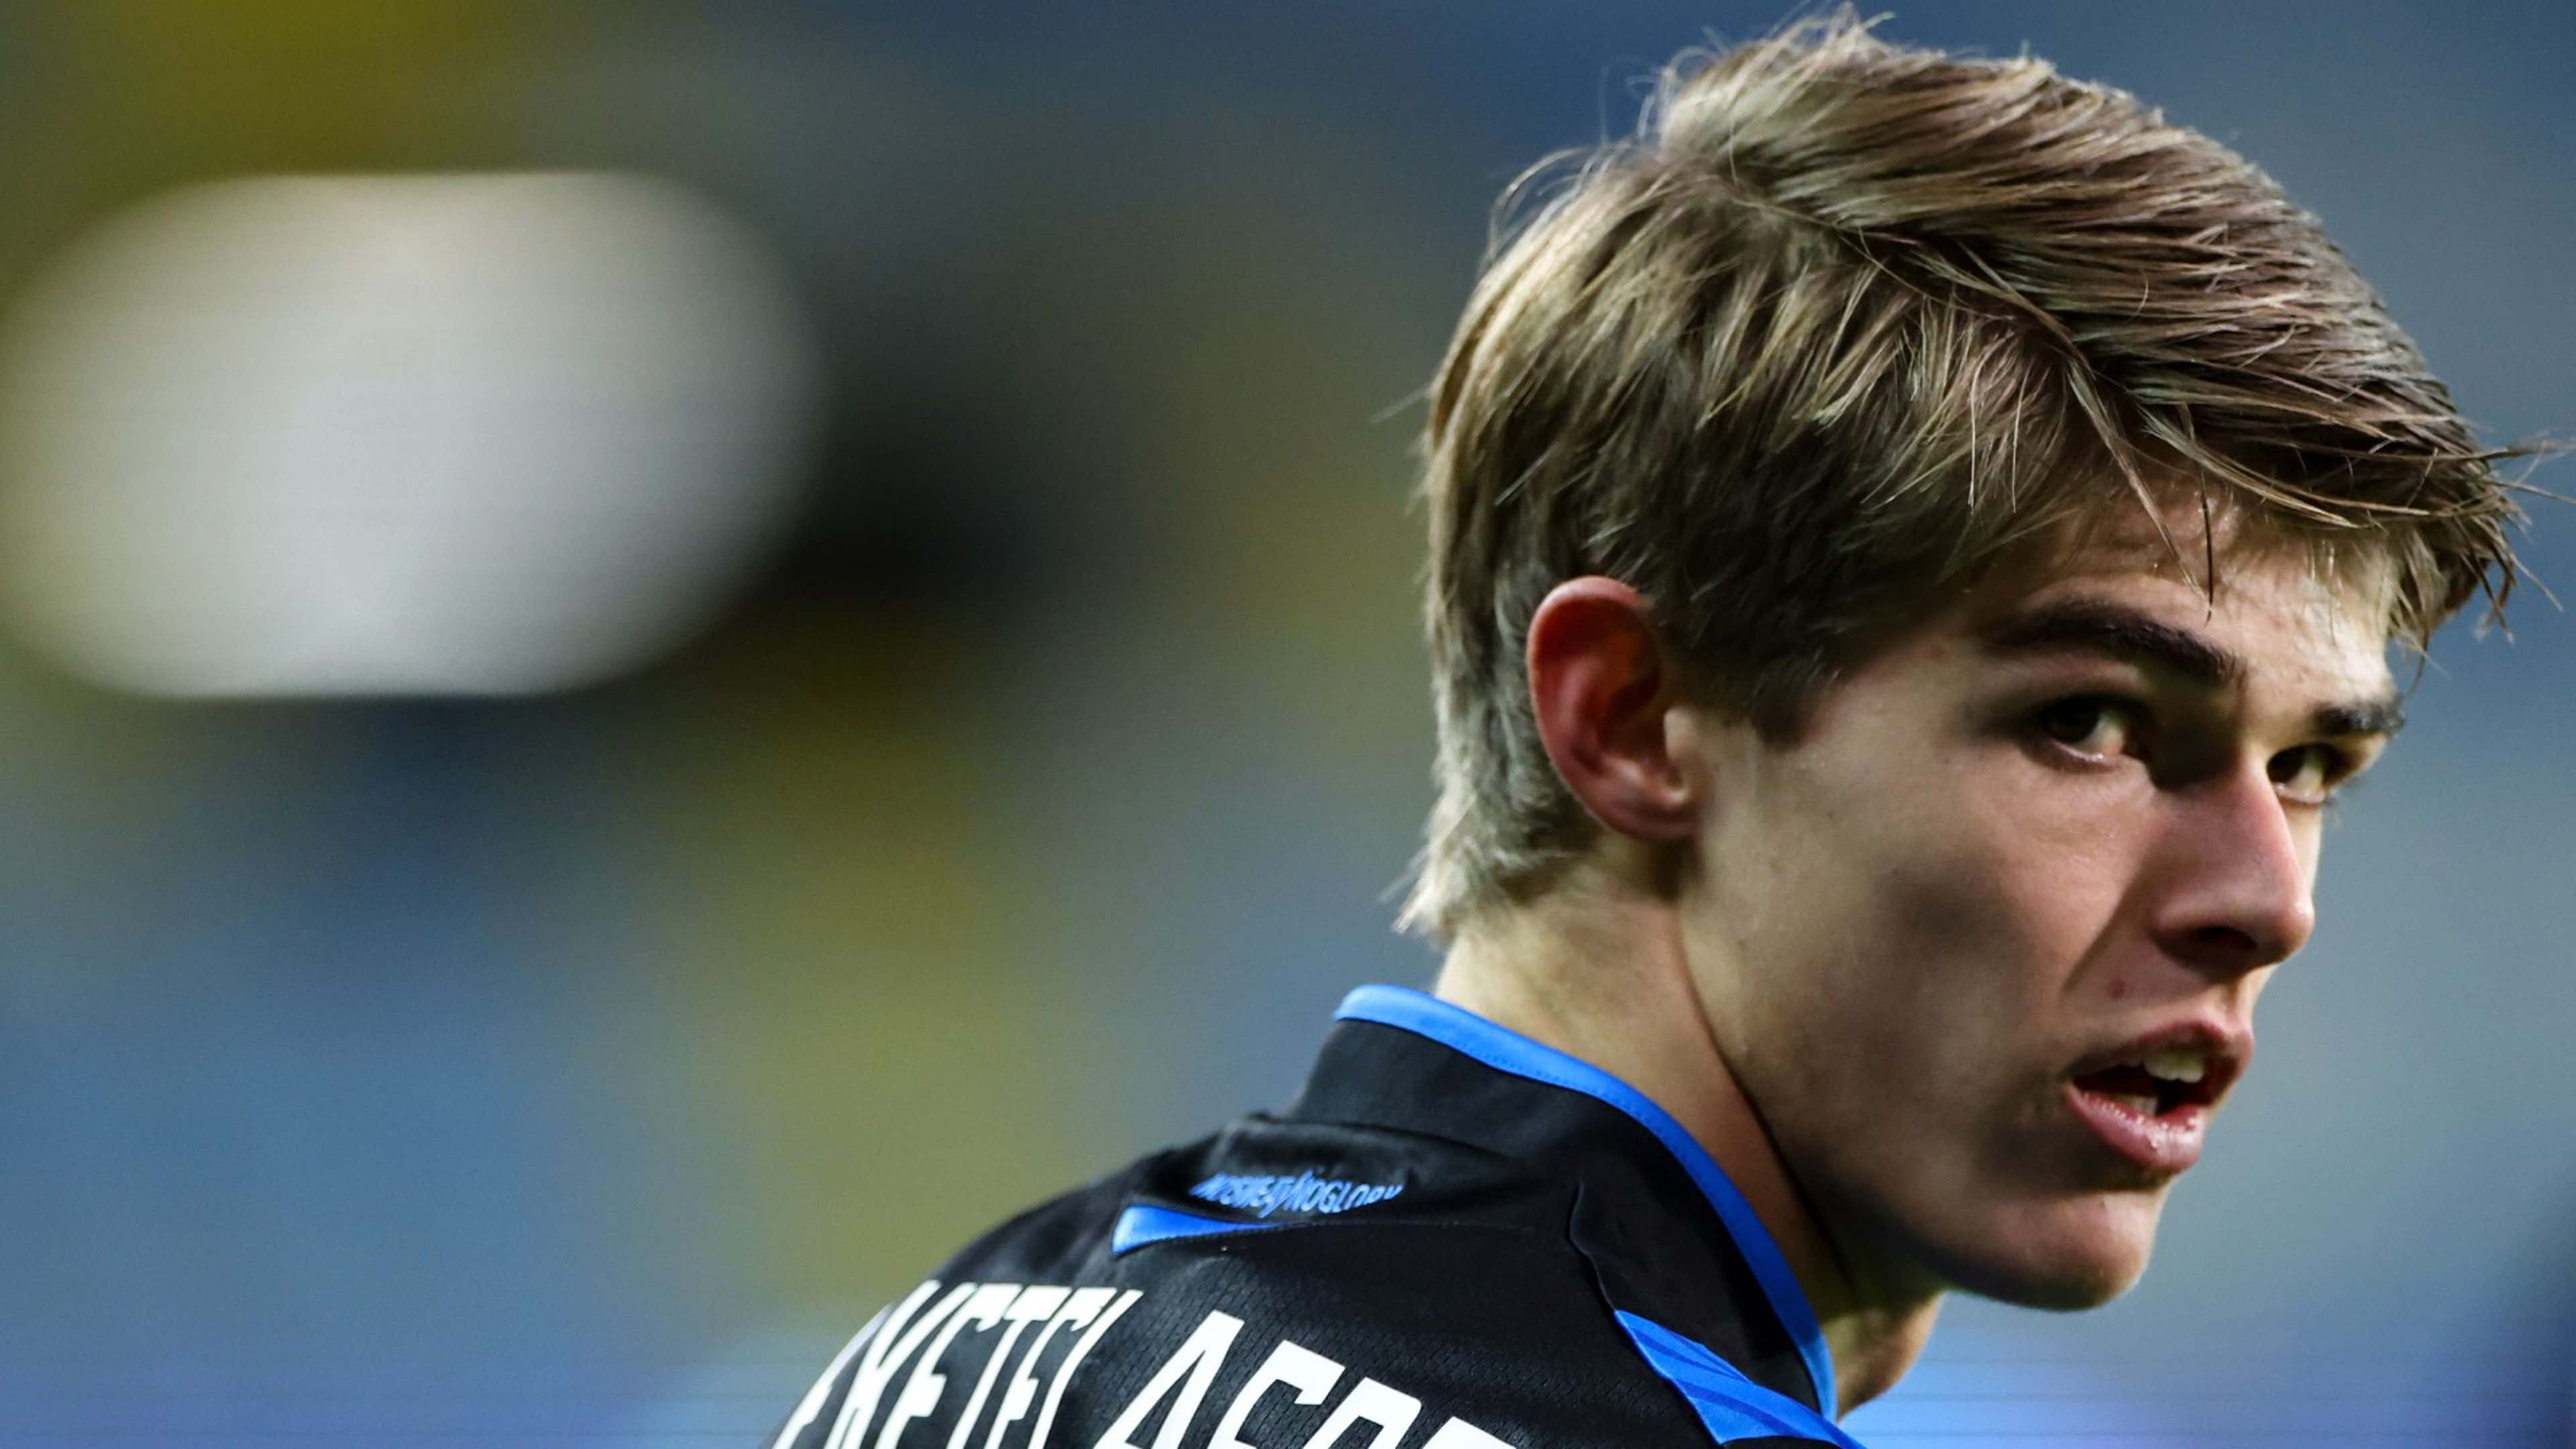 €25m Club Brugge wonderkid De Ketelaere dreams of playing abroad following  AC Milan & Lazio links